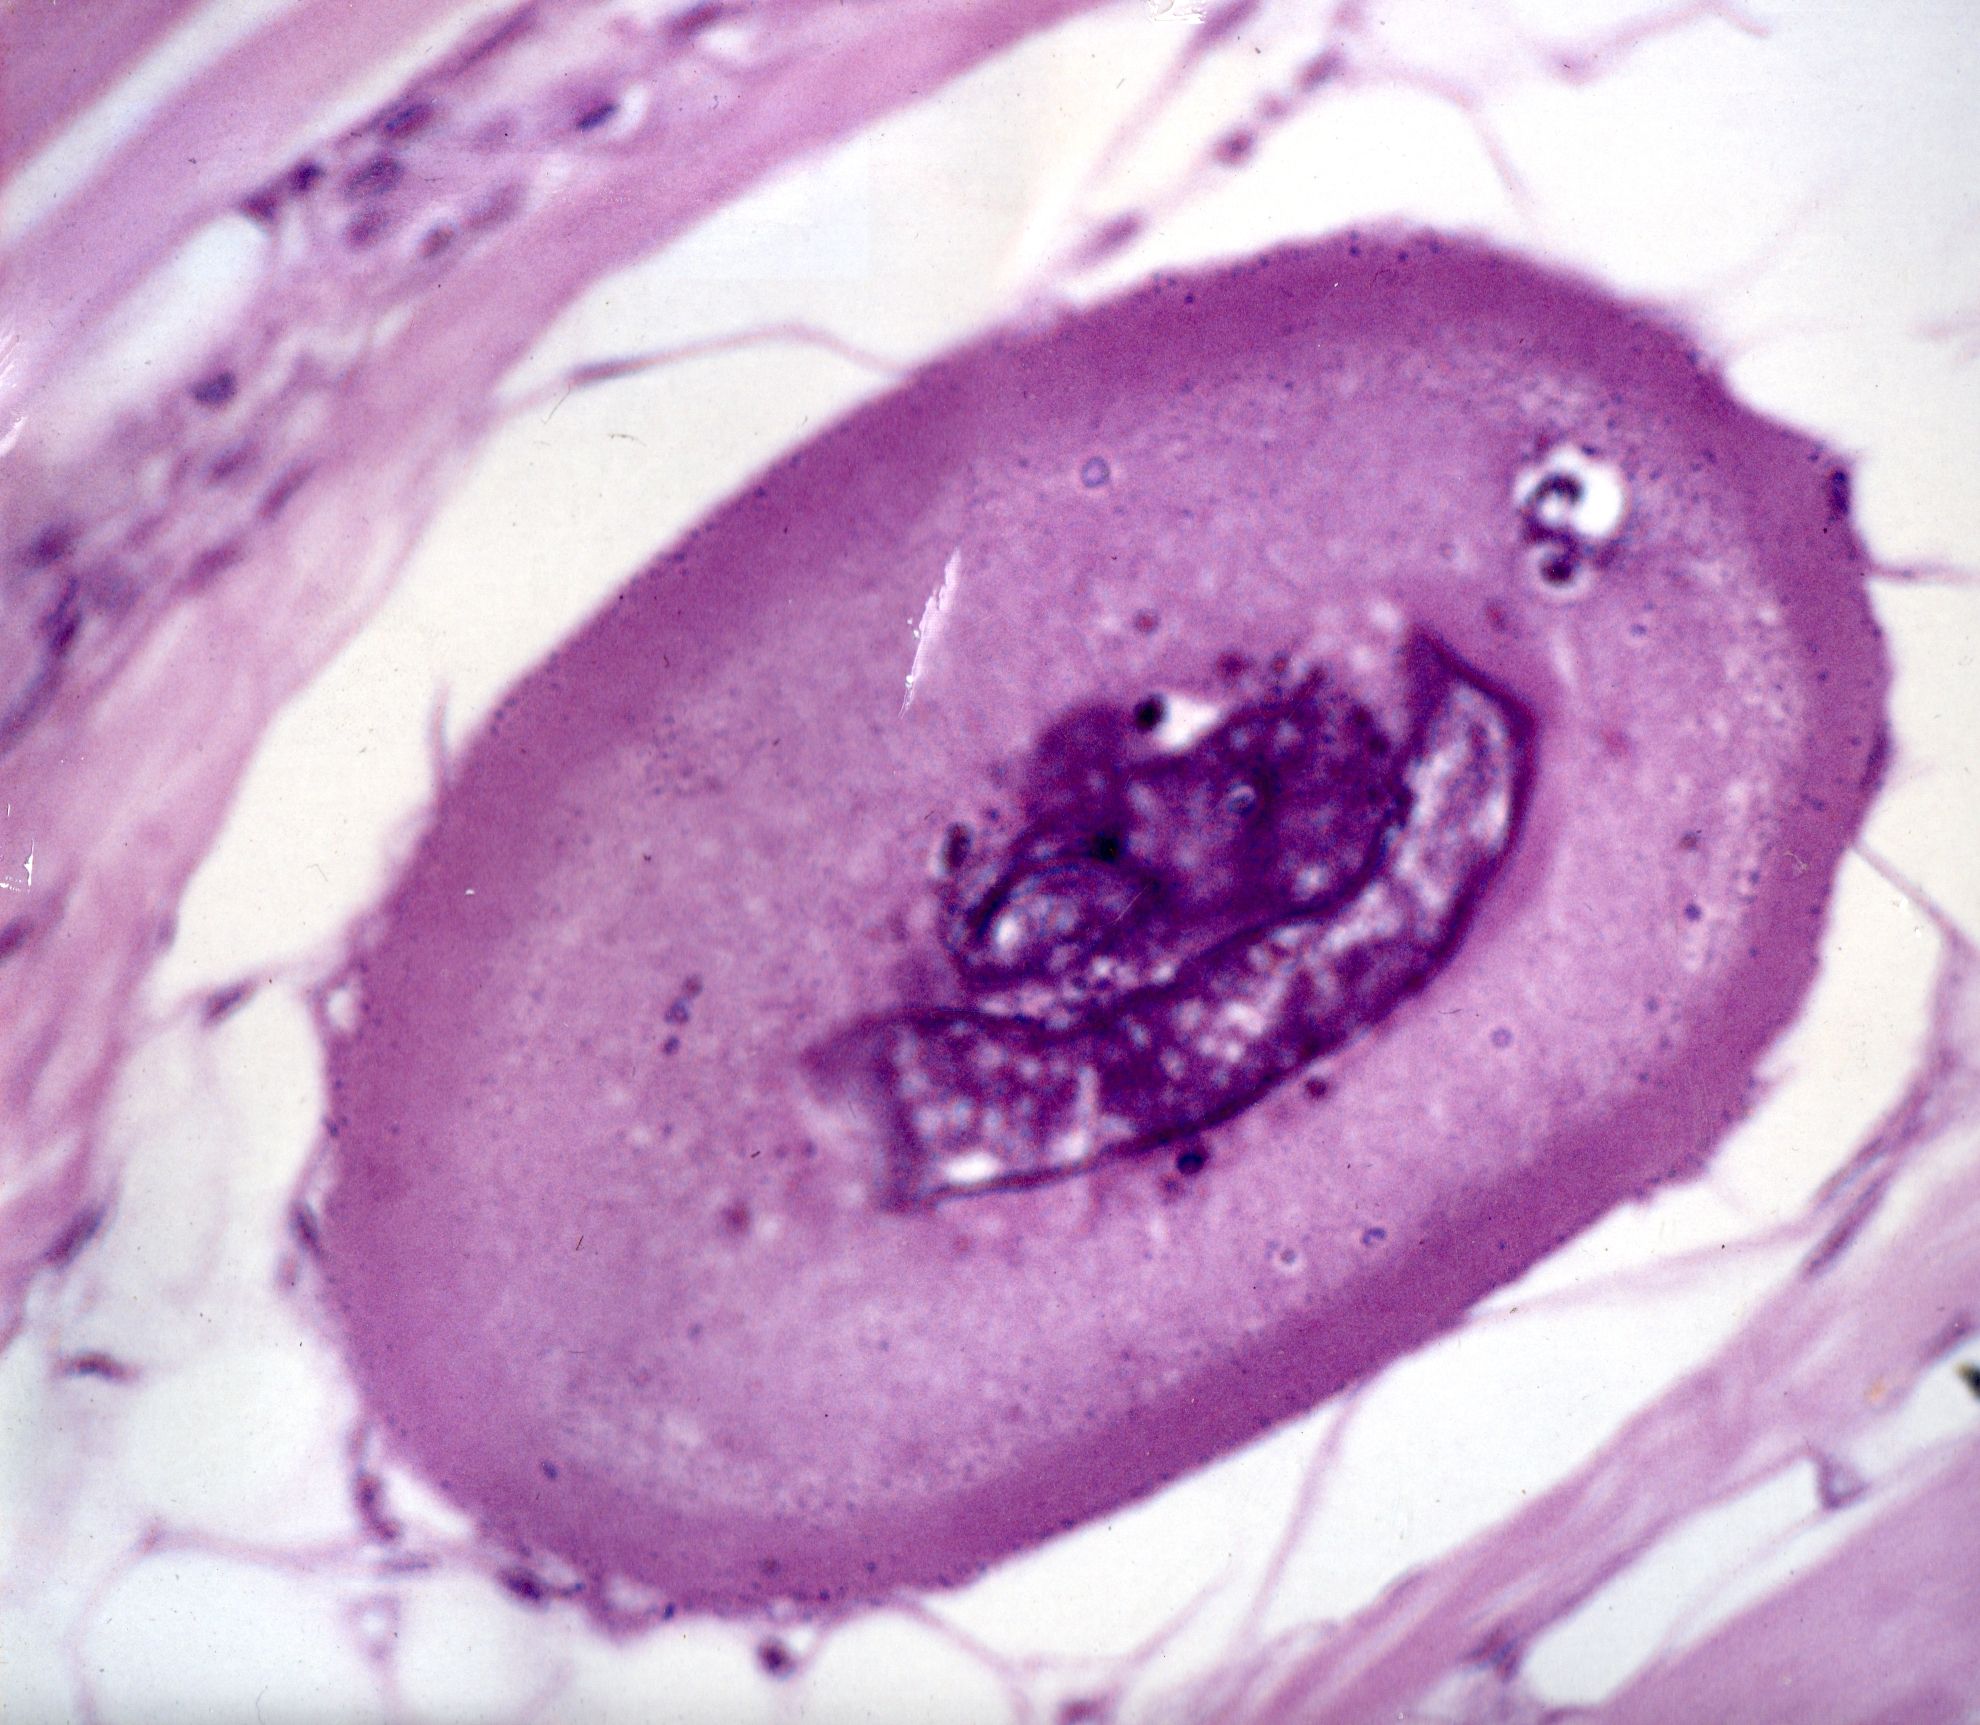 File:Larva de trichinella spiralis img397.jpg - Wikimedia Commons